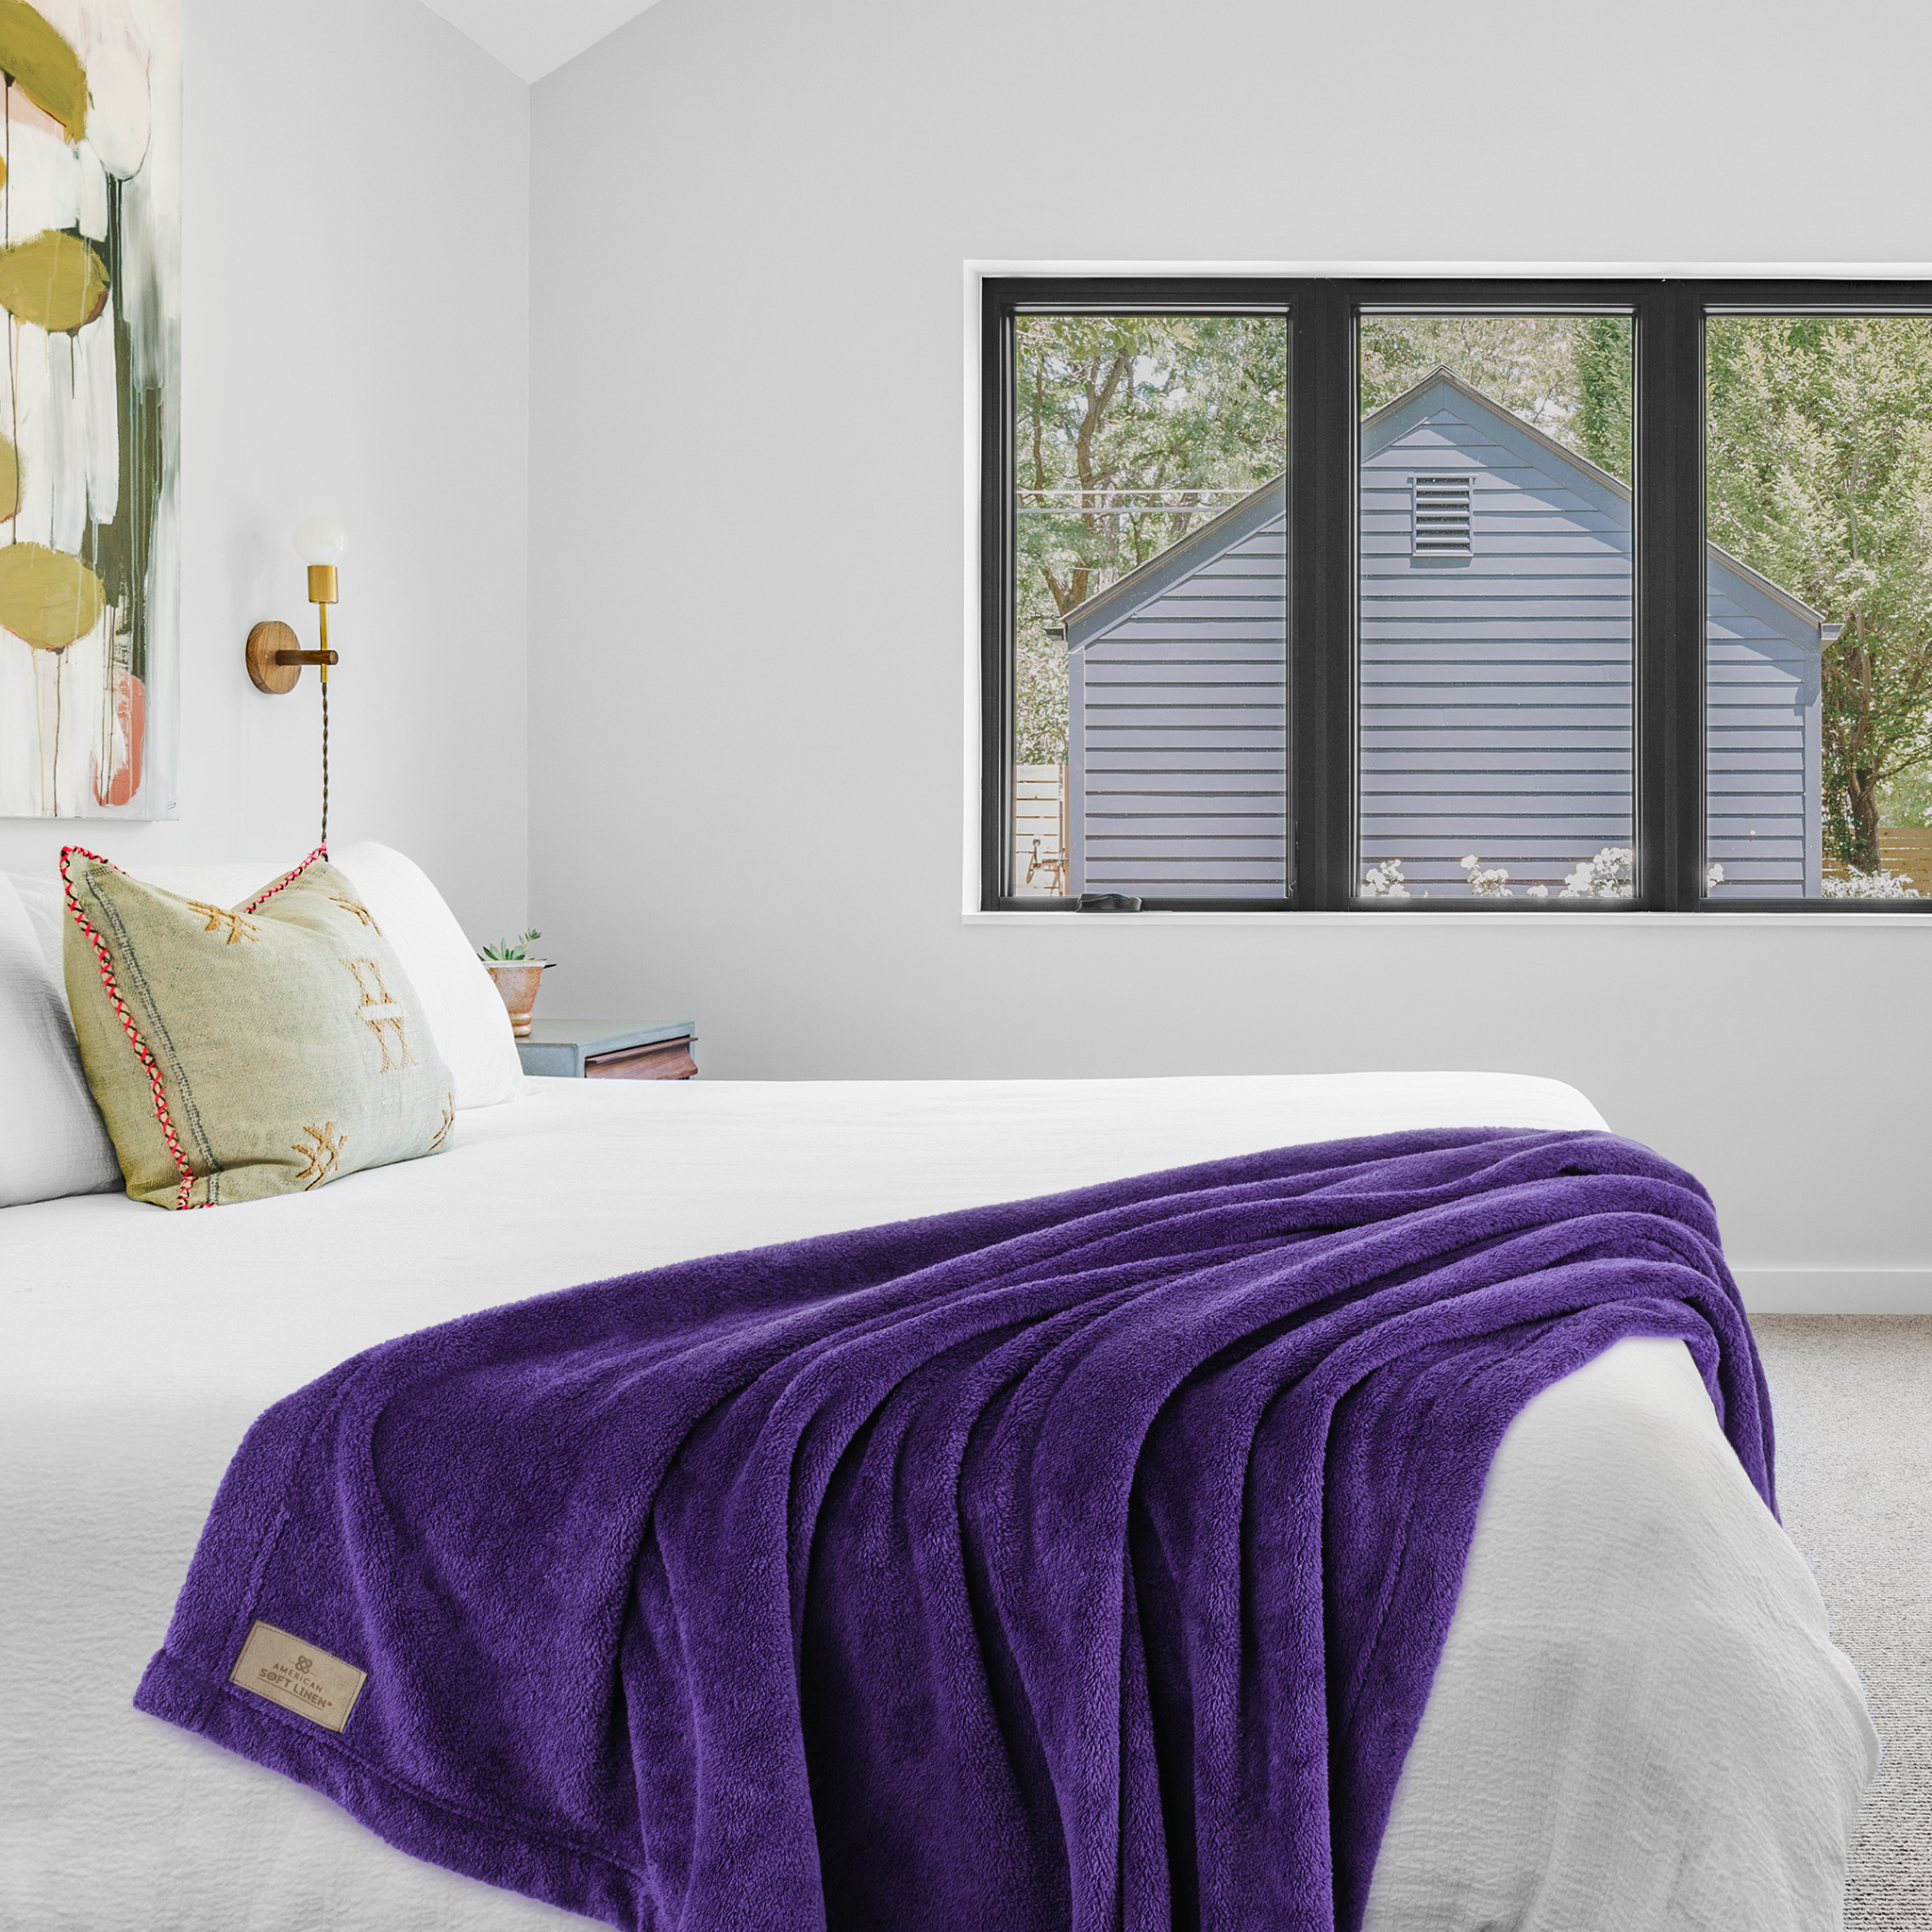 American Soft Linen - Bedding Fleece Blanket - Wholesale - 15 Set Case Pack - Twin Size 60x80 inches - Purple - 2